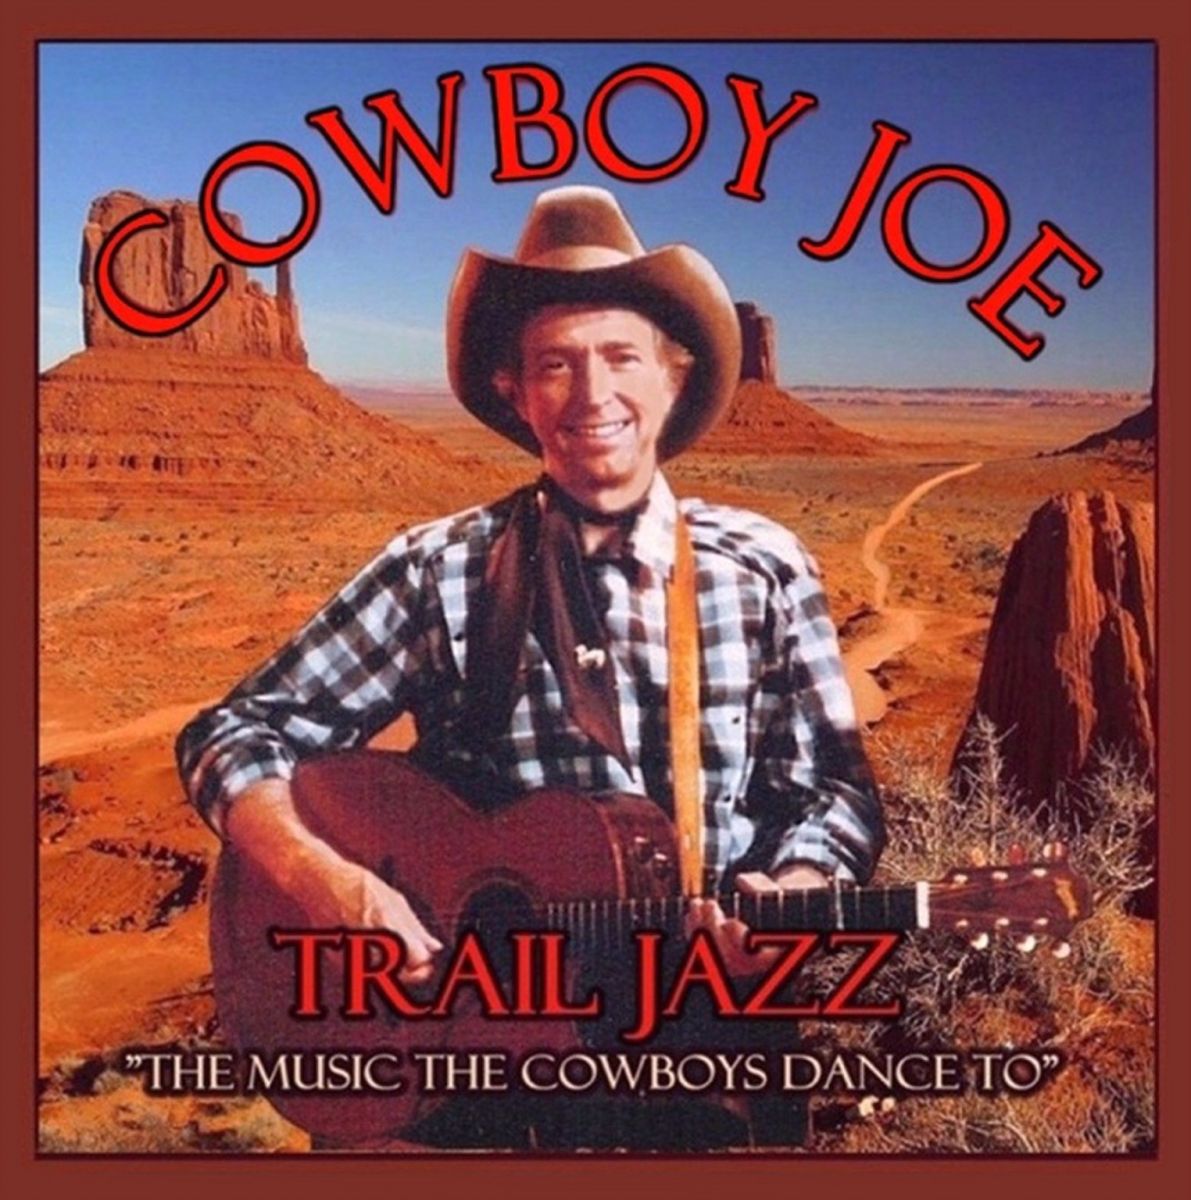 Cowboy Joe Babcock